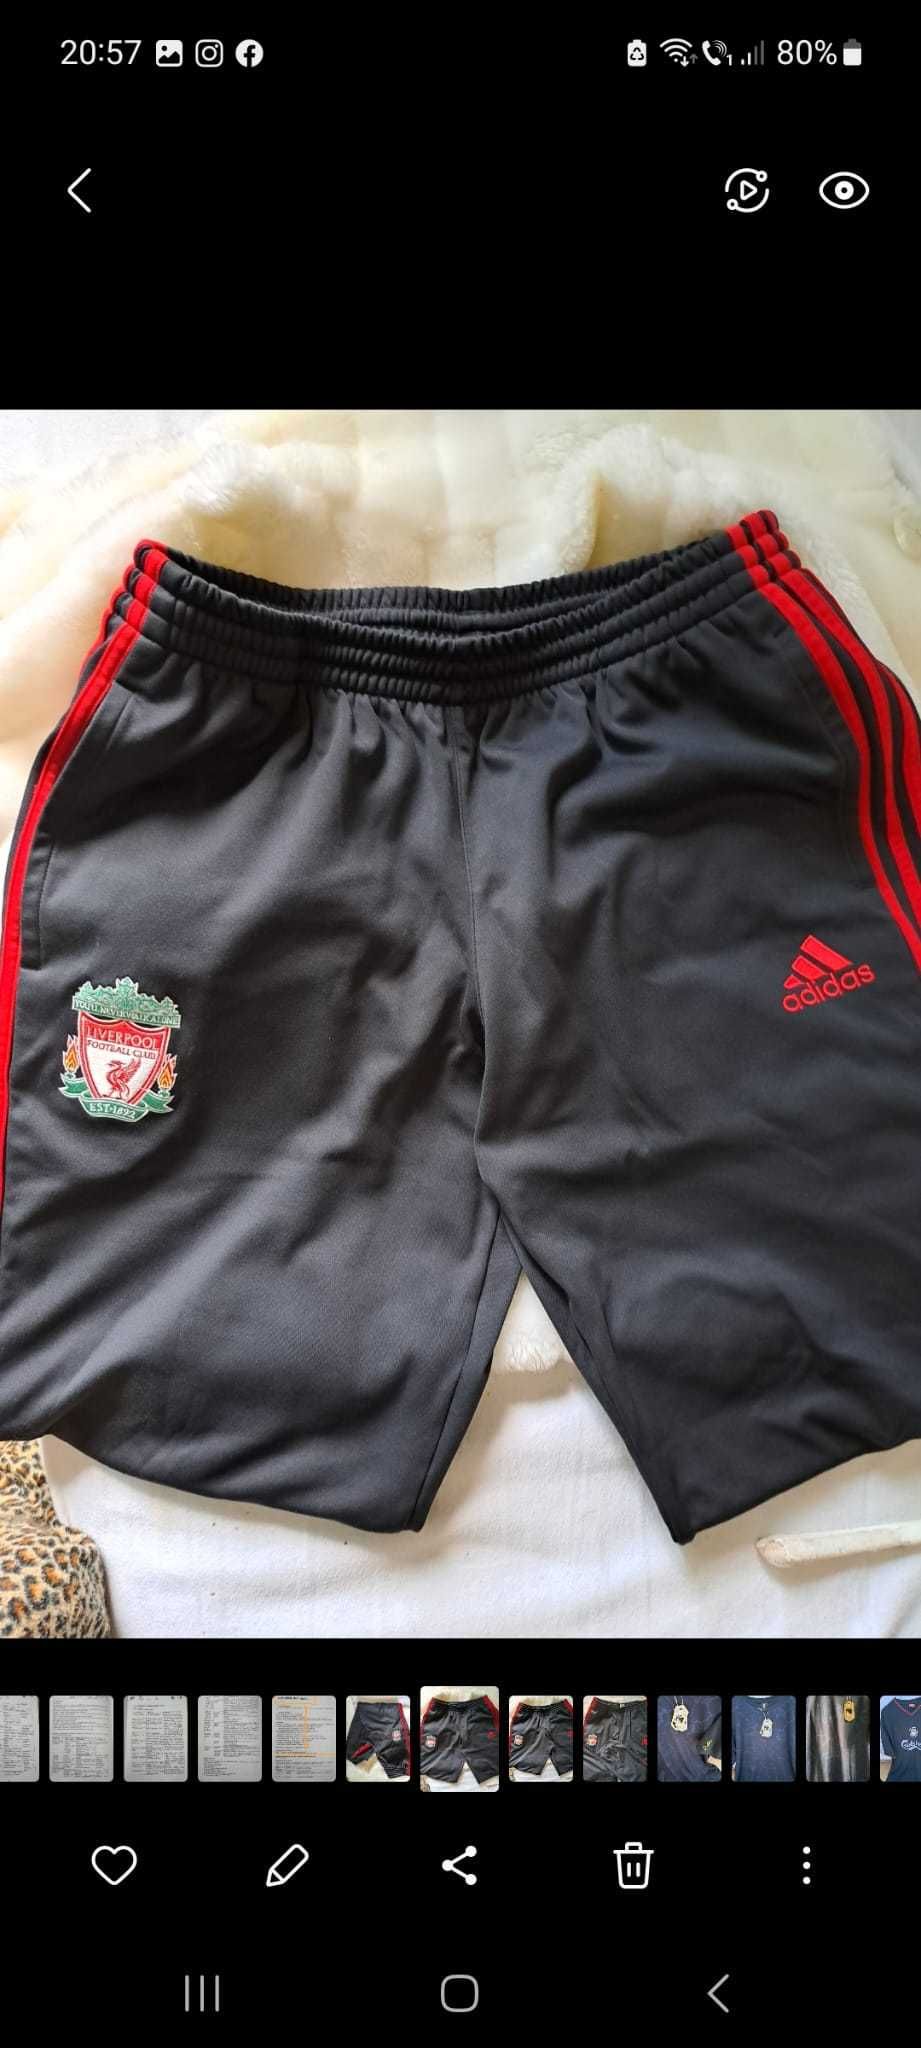 Pantaloni Adiddas - LFC - Liverpool Football Club